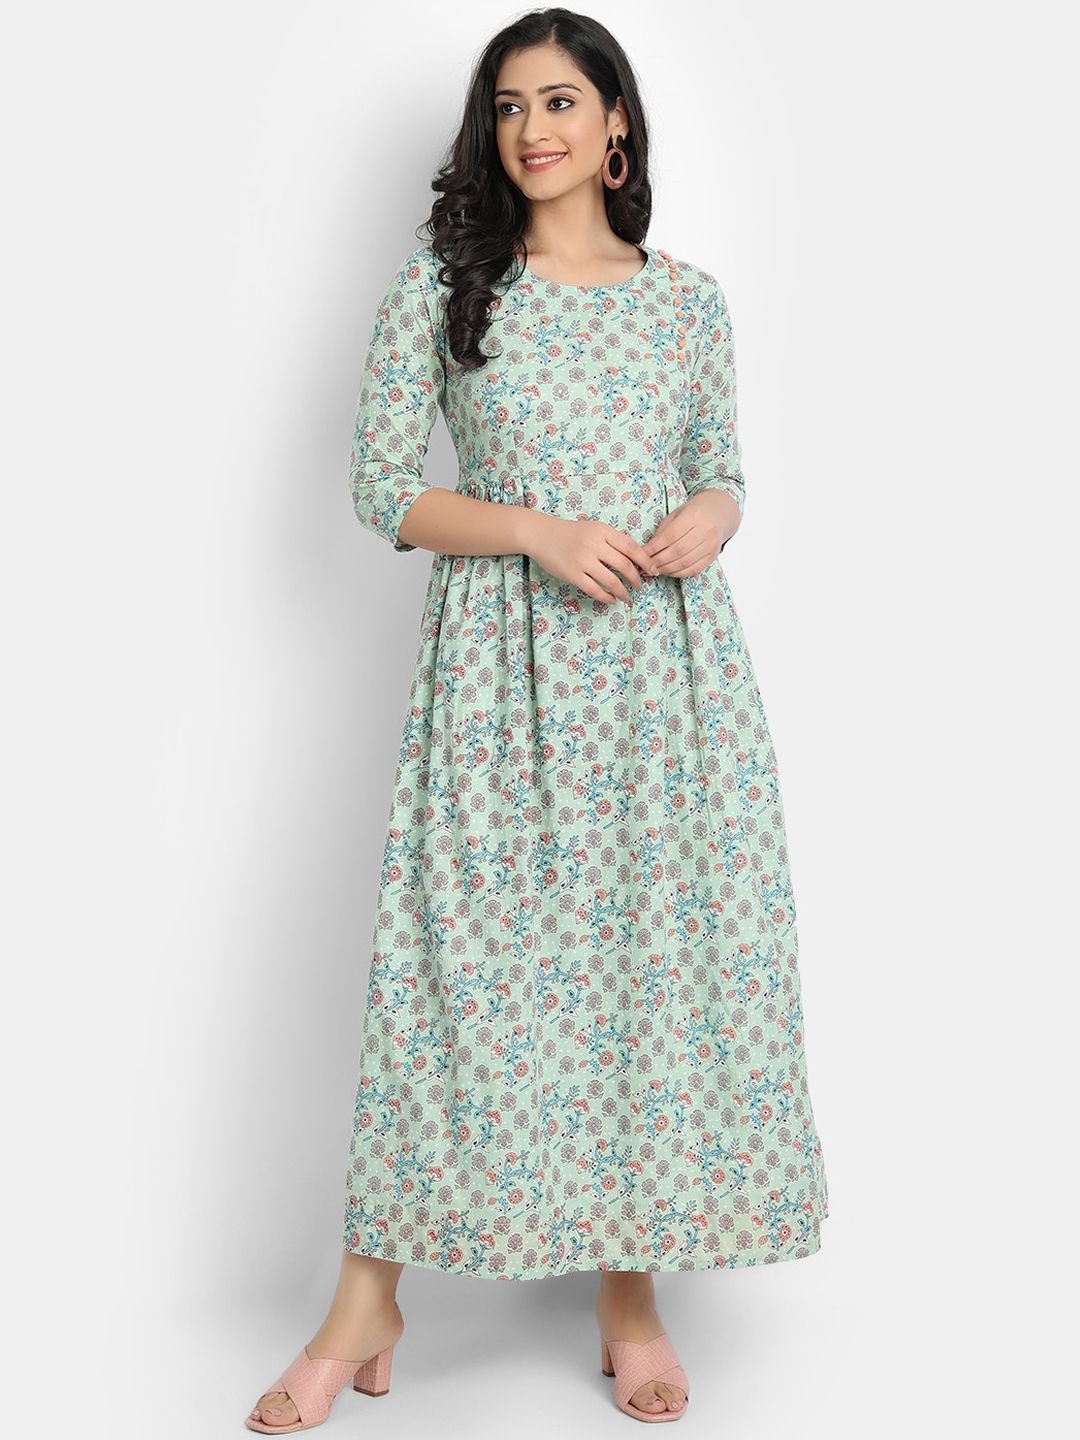 SUTI Green Floral Maxi Dress Price in India